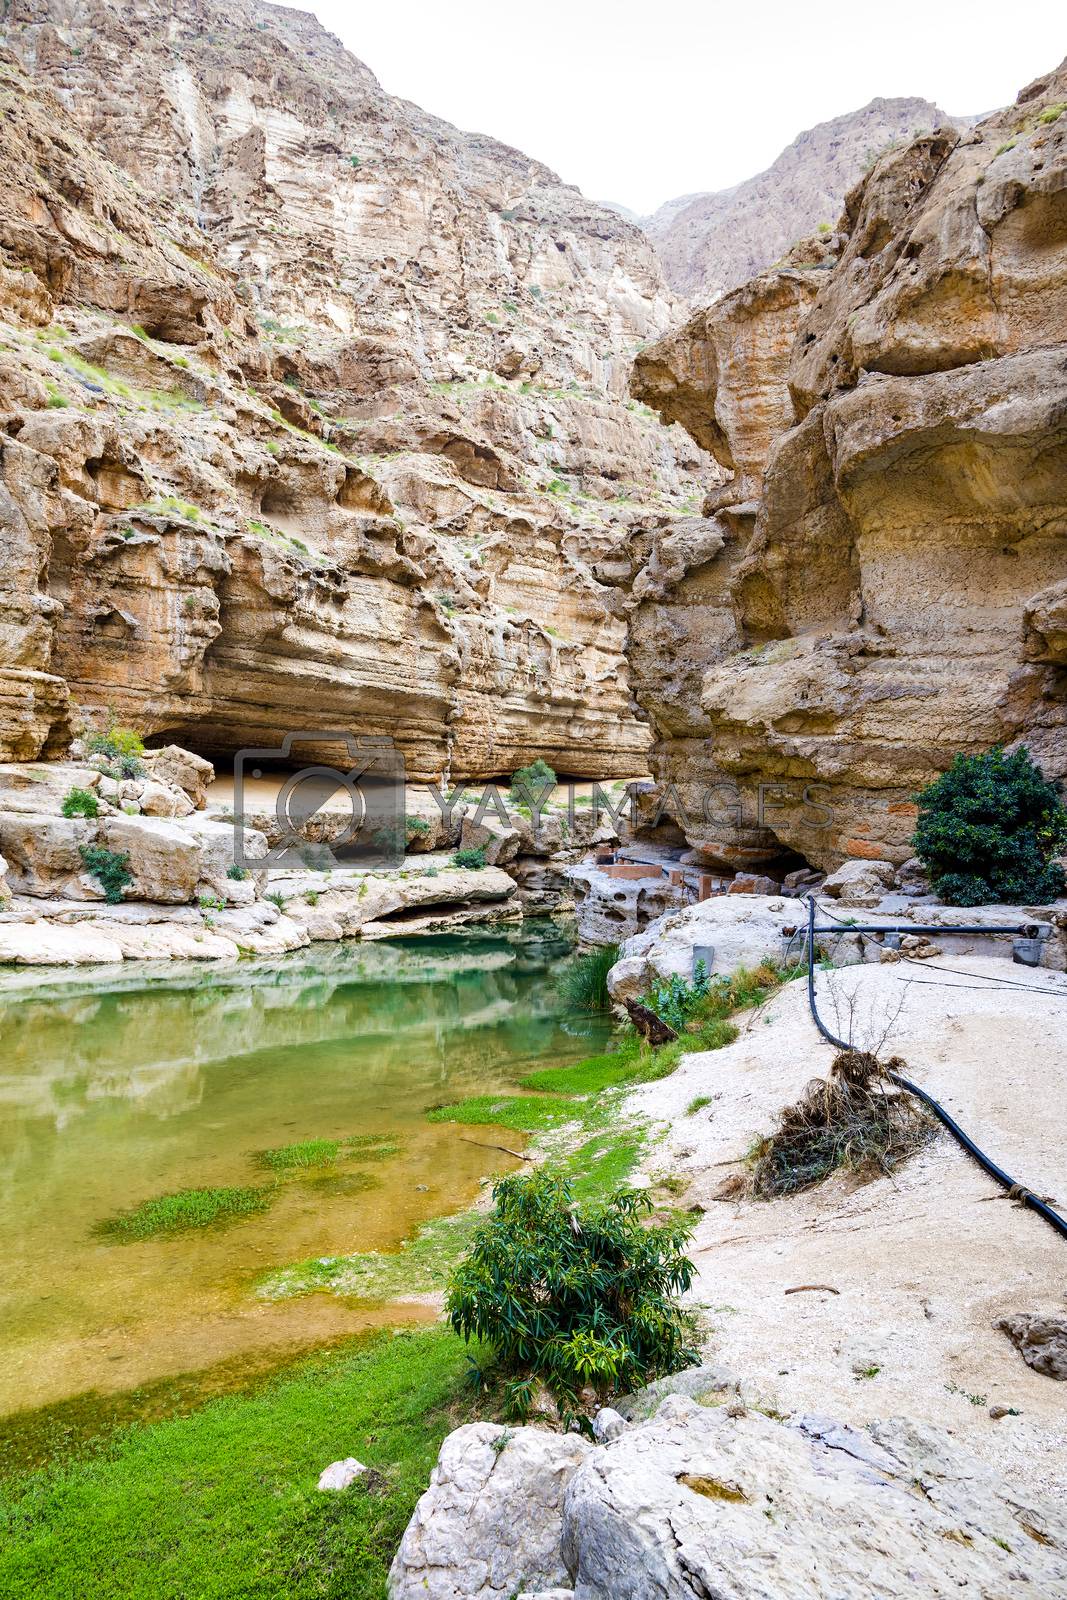 Royalty free image of Wadi Shab Oman by w20er